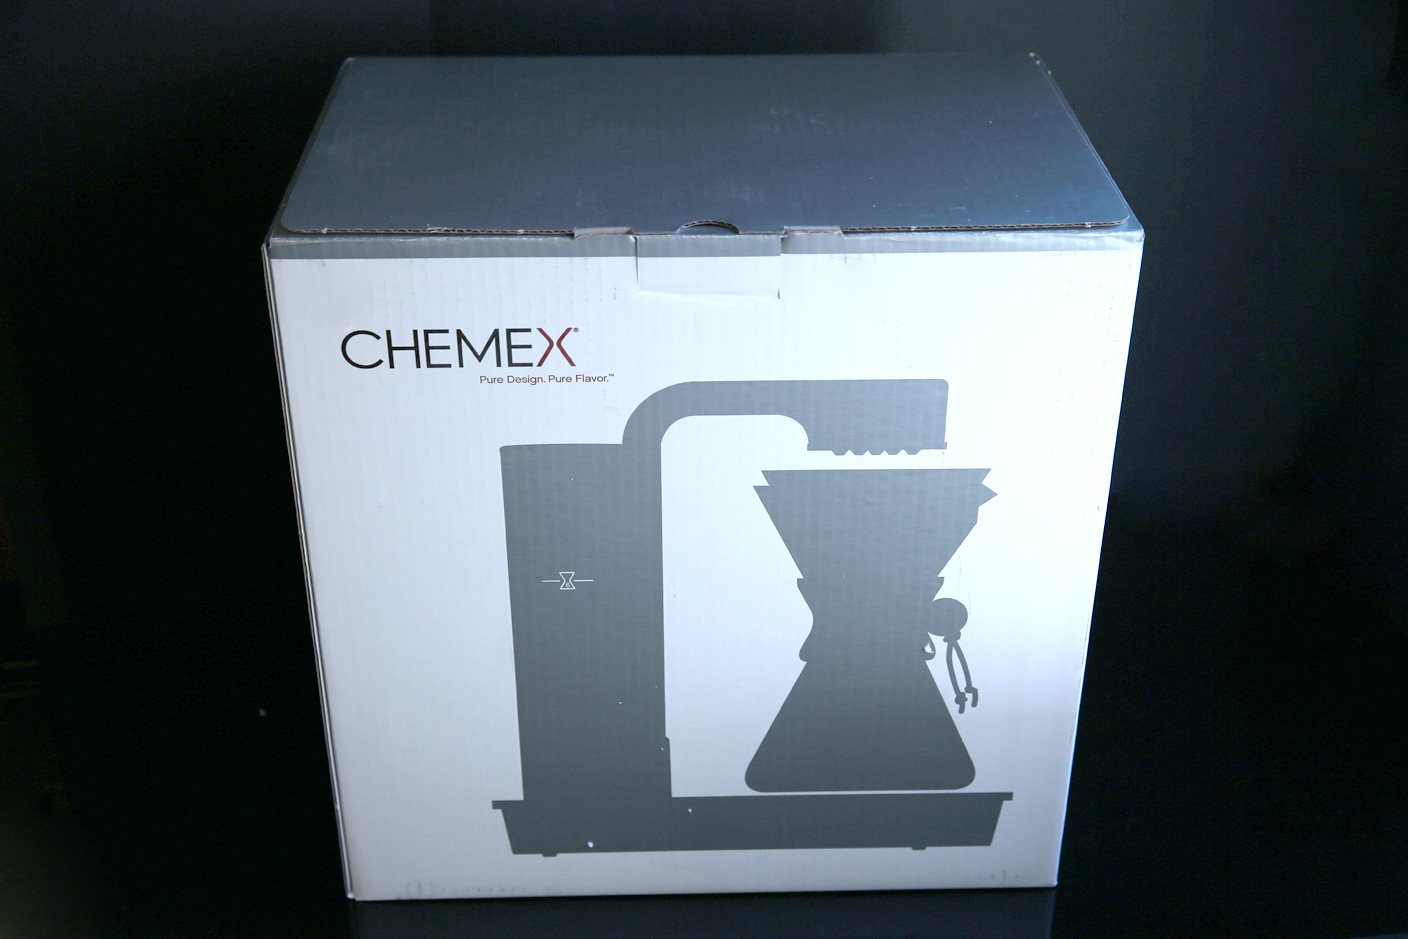 Review: Chemex's new Ottomatic vs. Wilfa's Precision Coffee Maker